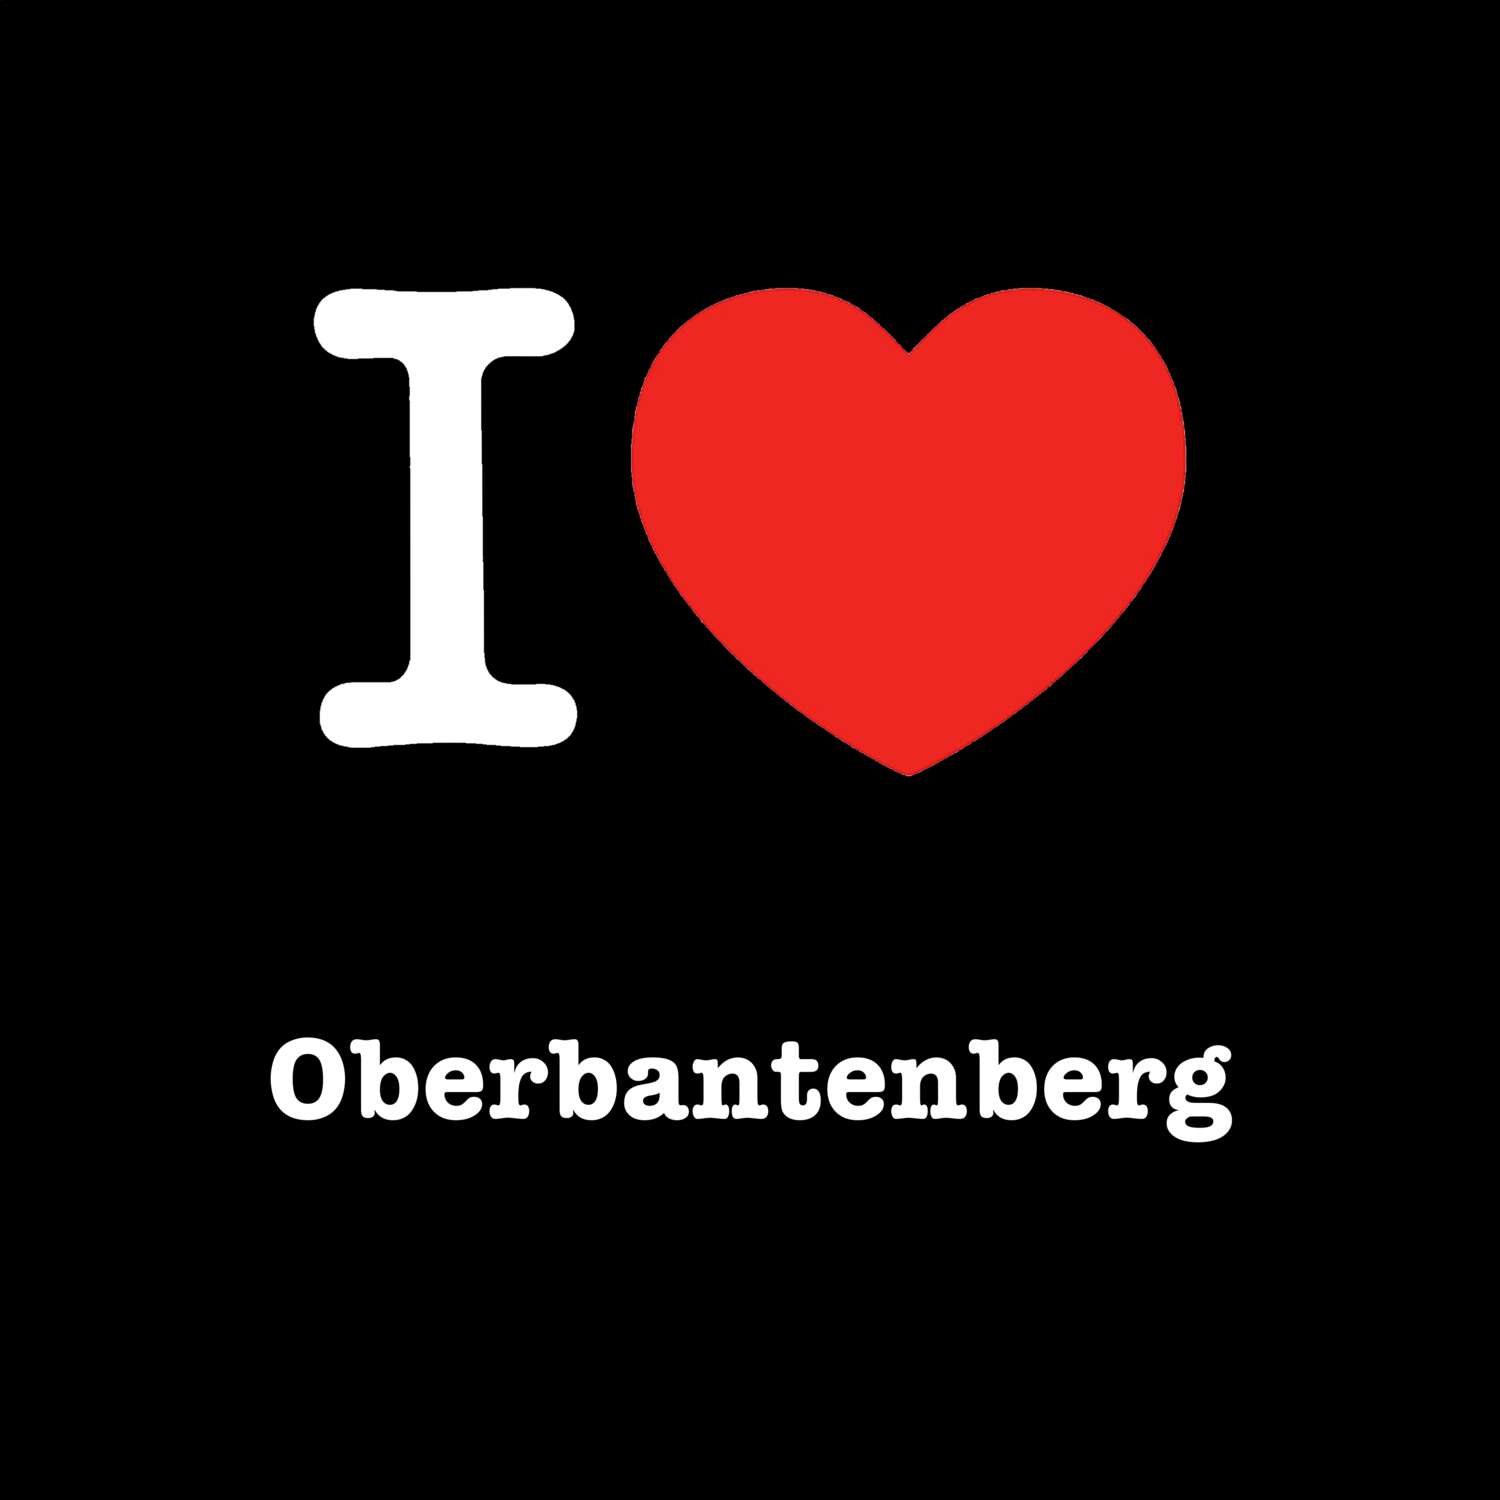 Oberbantenberg T-Shirt »I love«